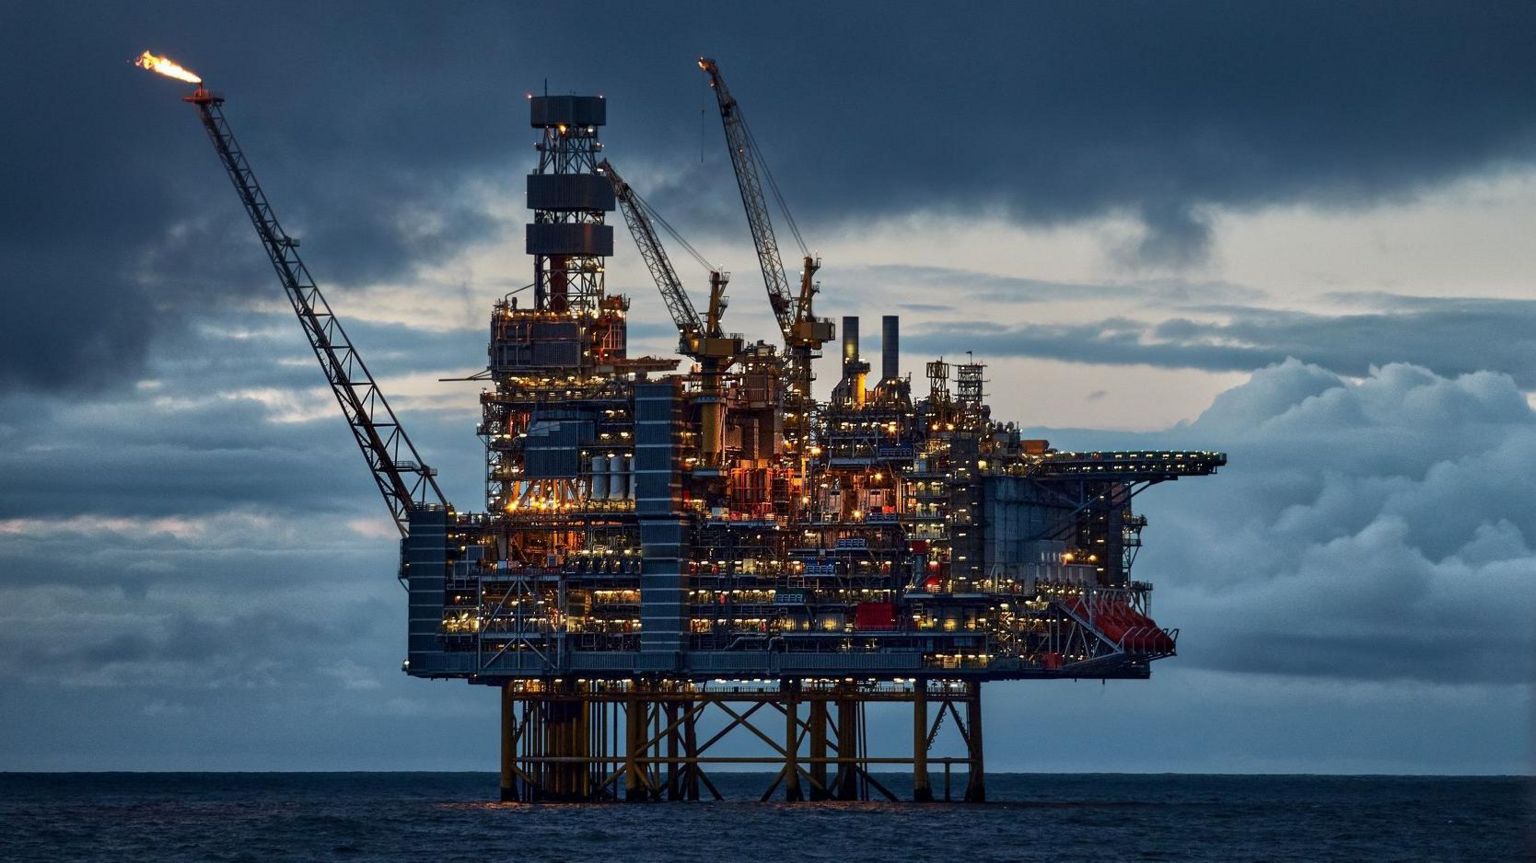 Offshore oil rig in Scotland